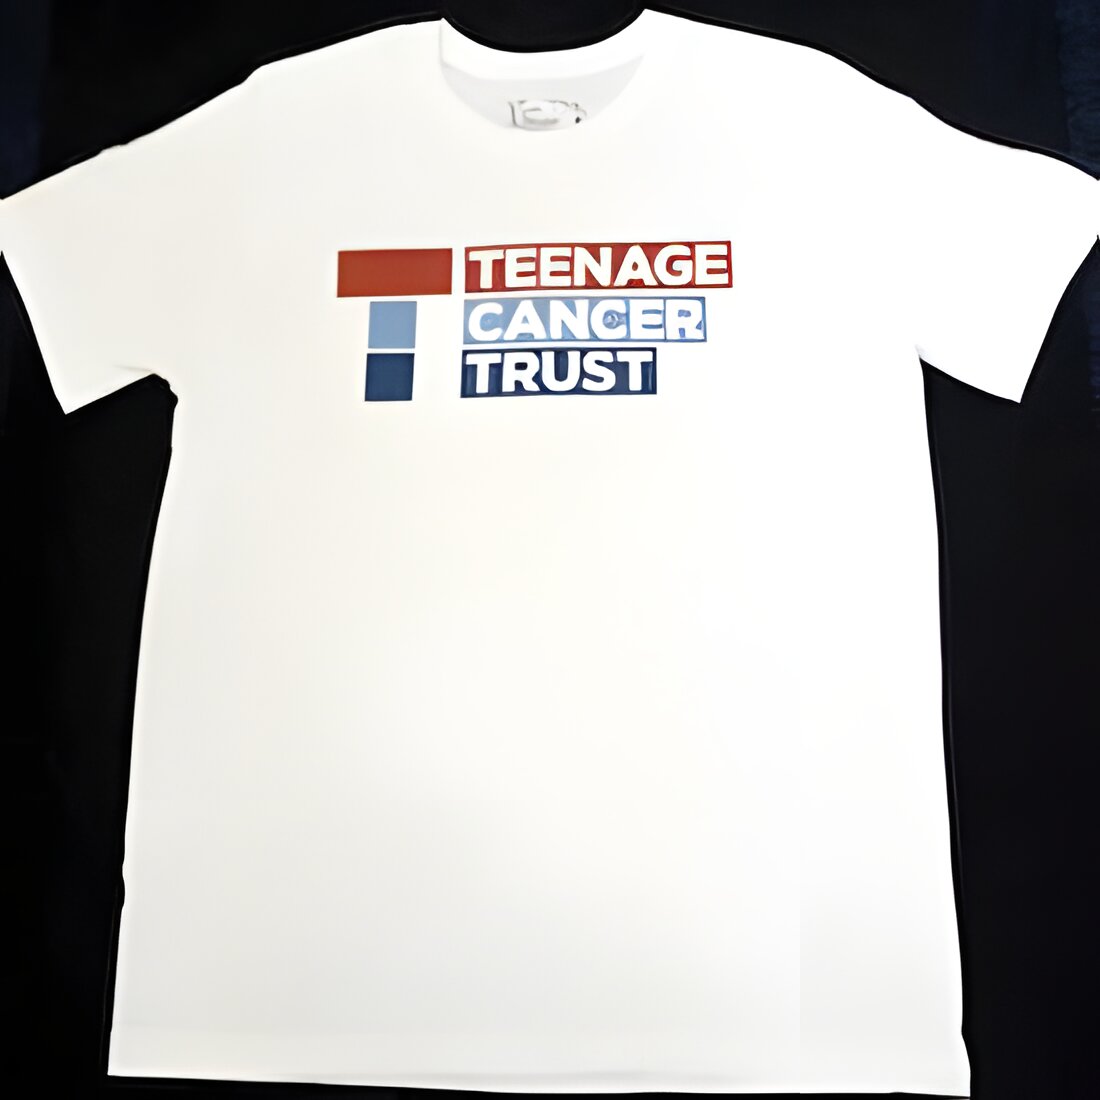 Free Teenage Cancer Trust T-Shirt